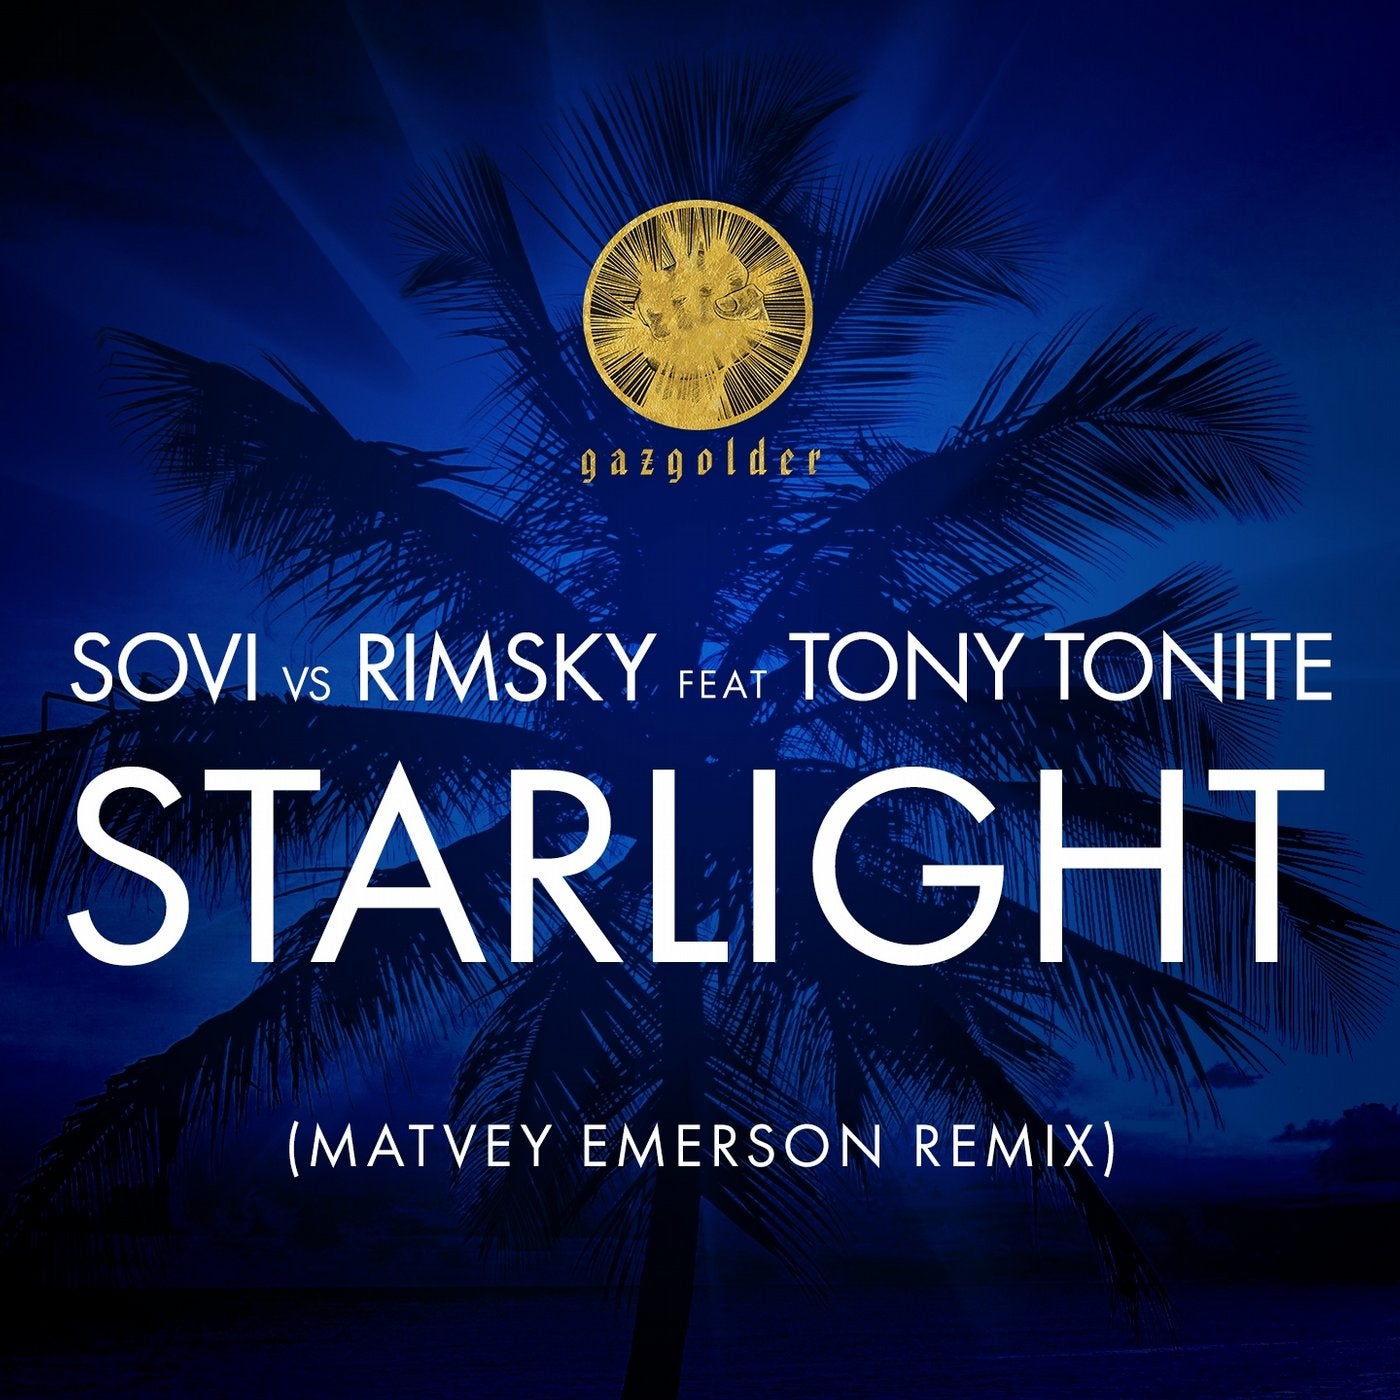 Starlight (Matvey Emerson Remix) (feat. Tony Tonite)